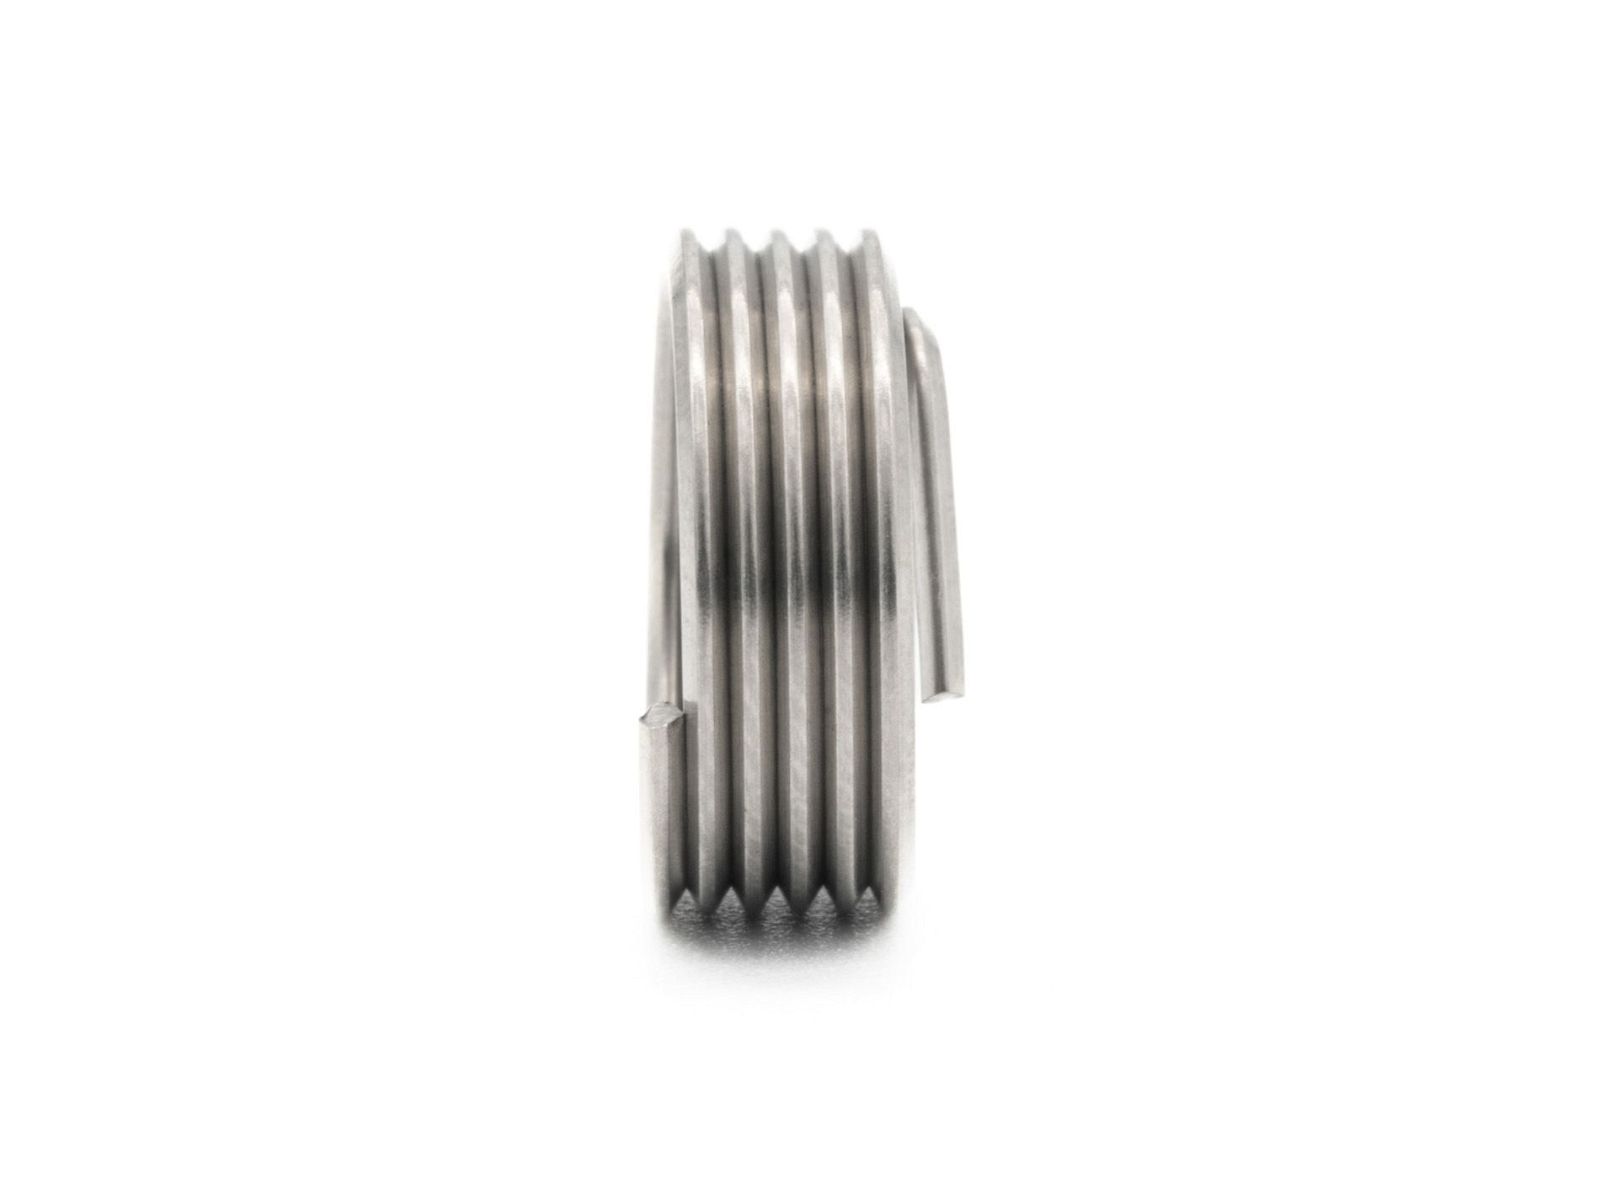 BaerCoil Wire Thread Inserts G (BSP) 1/8 x 28 - 1.5 D (4.76 mm) - free running - 100 pcs.